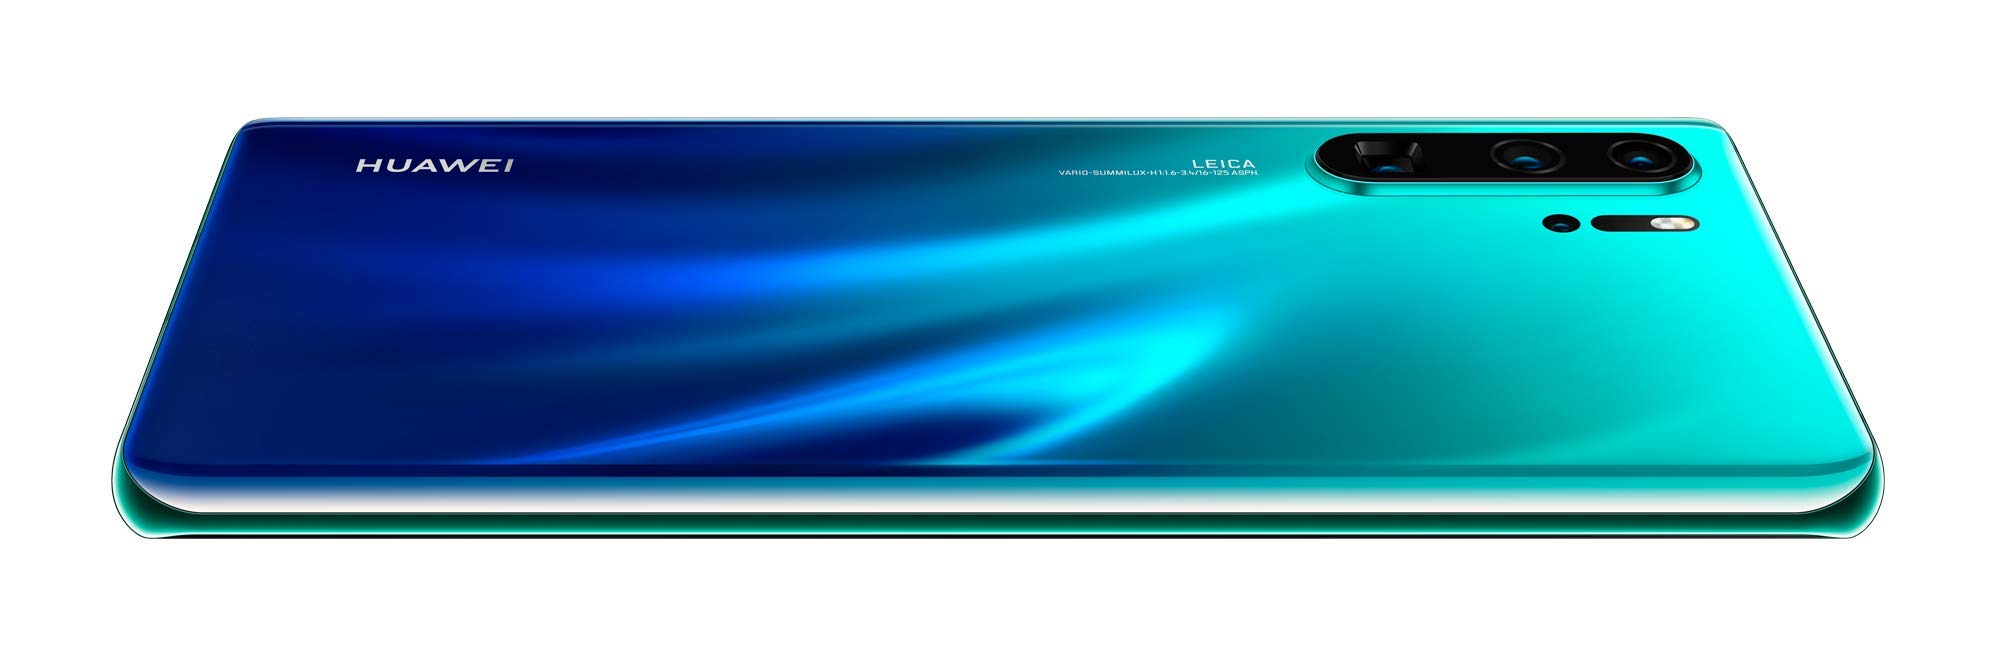 Huawei P30 Pro 256 GB Dual/Hybrid-SIM 4G Smartphone (Aurora Blue)